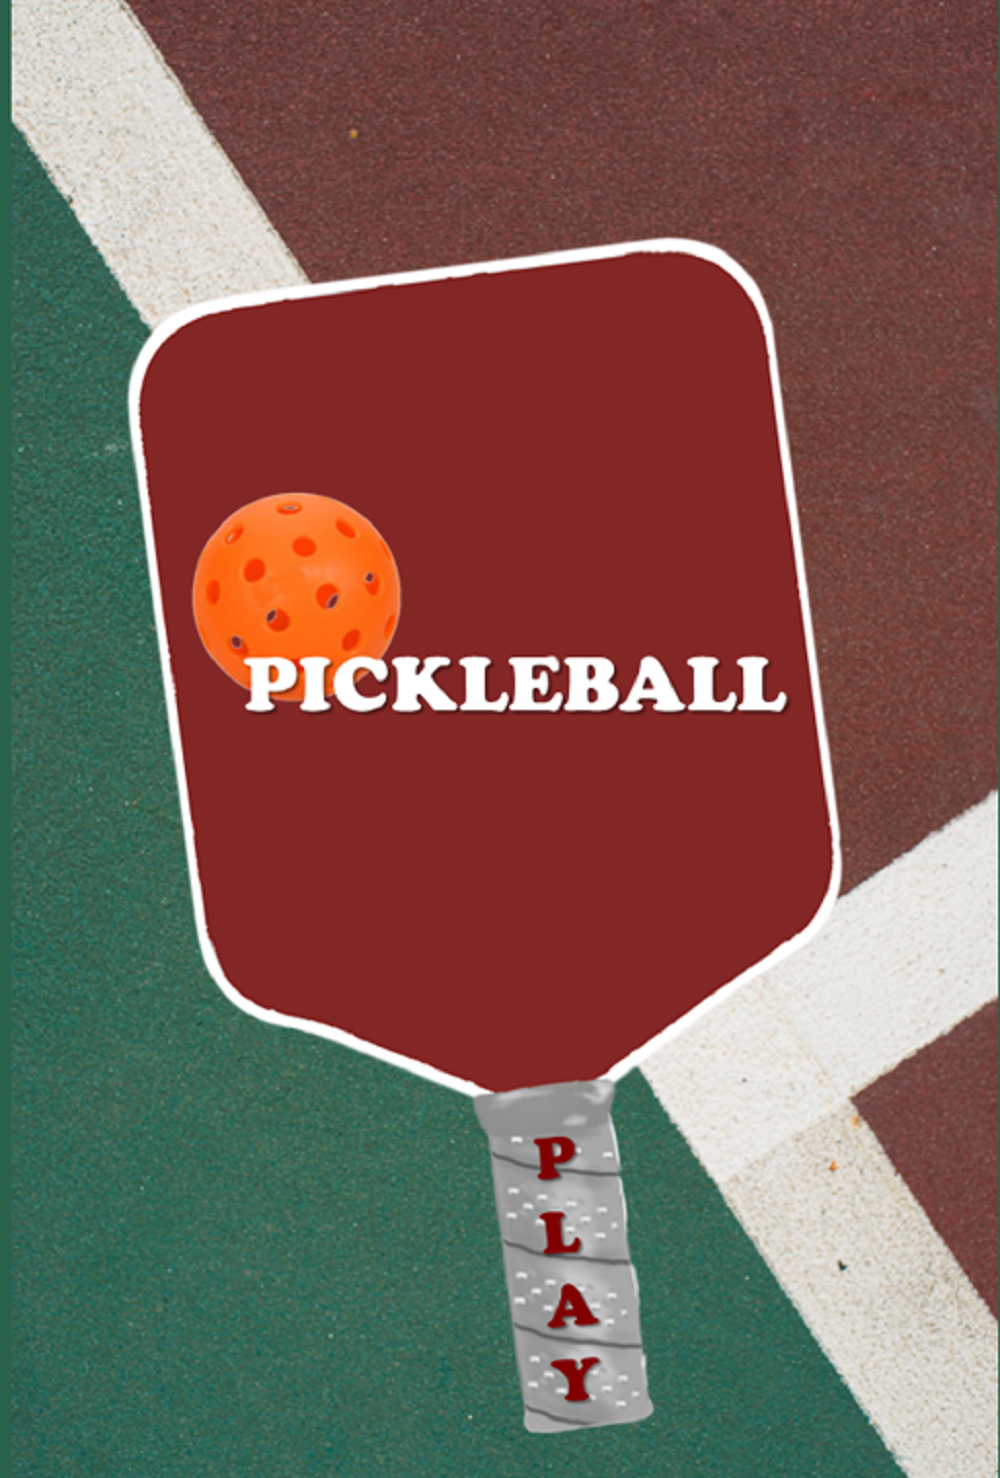 Pickleball Player Logbook - Notebook & Score Keeping